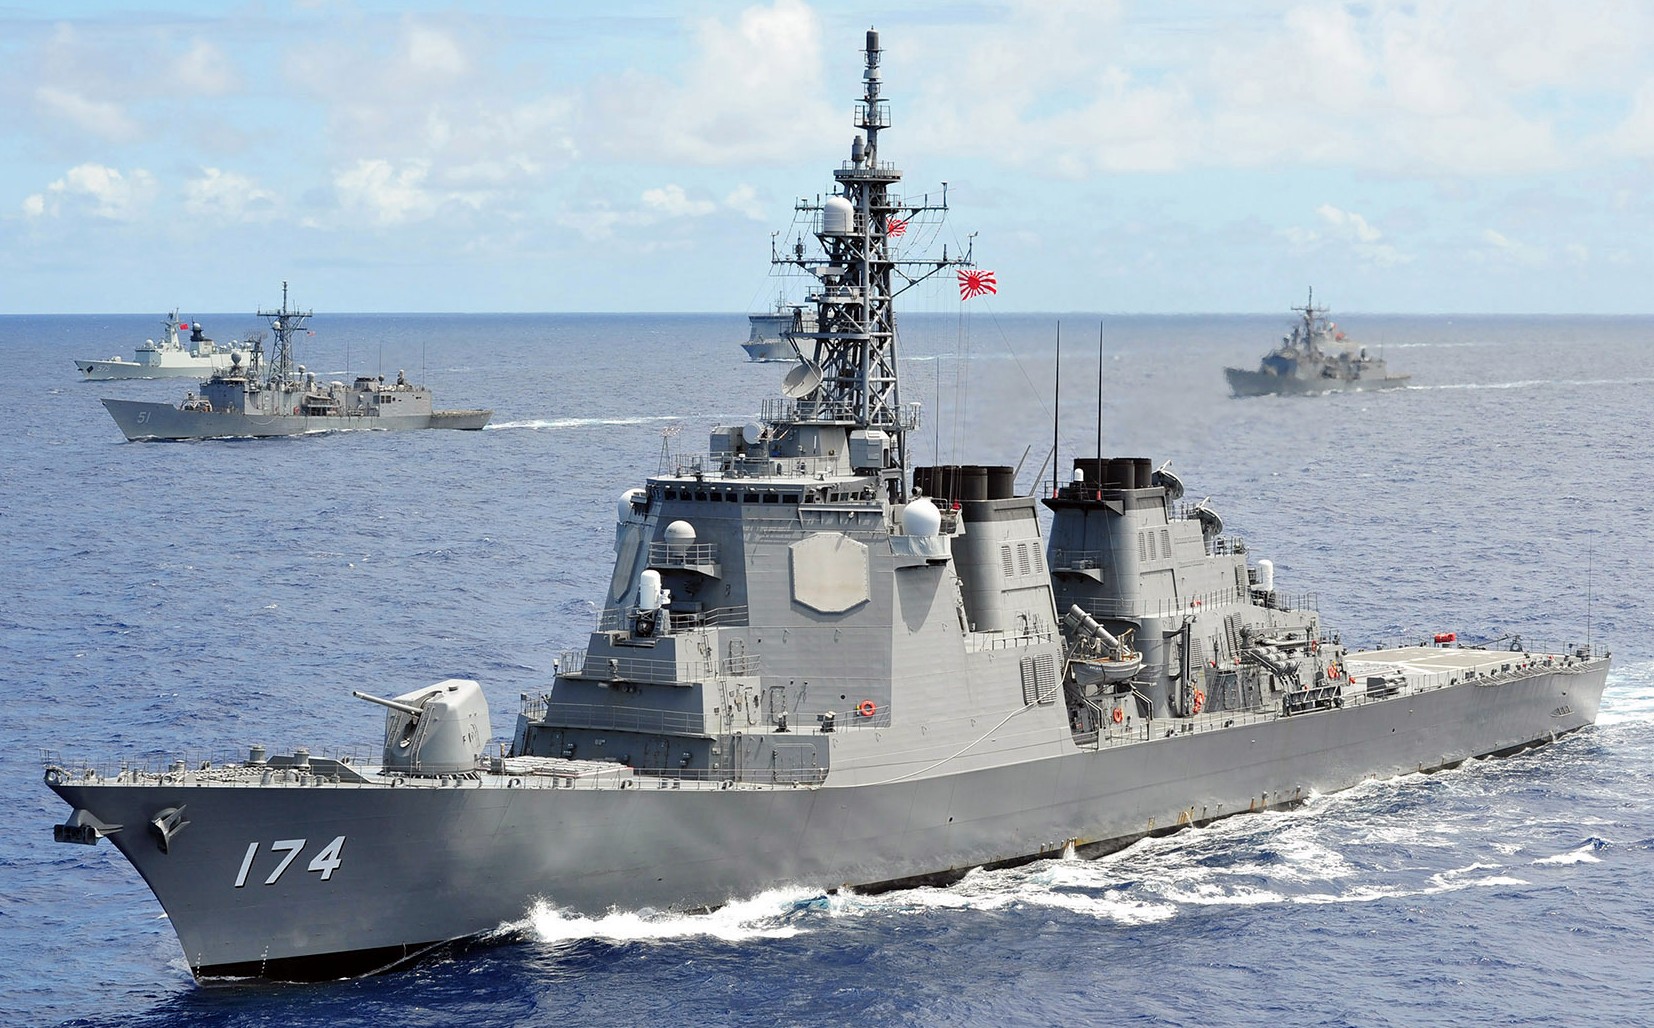 ddg-174 jds kirishima kongou class destroyer japan maritime self defense force jmsdf 34